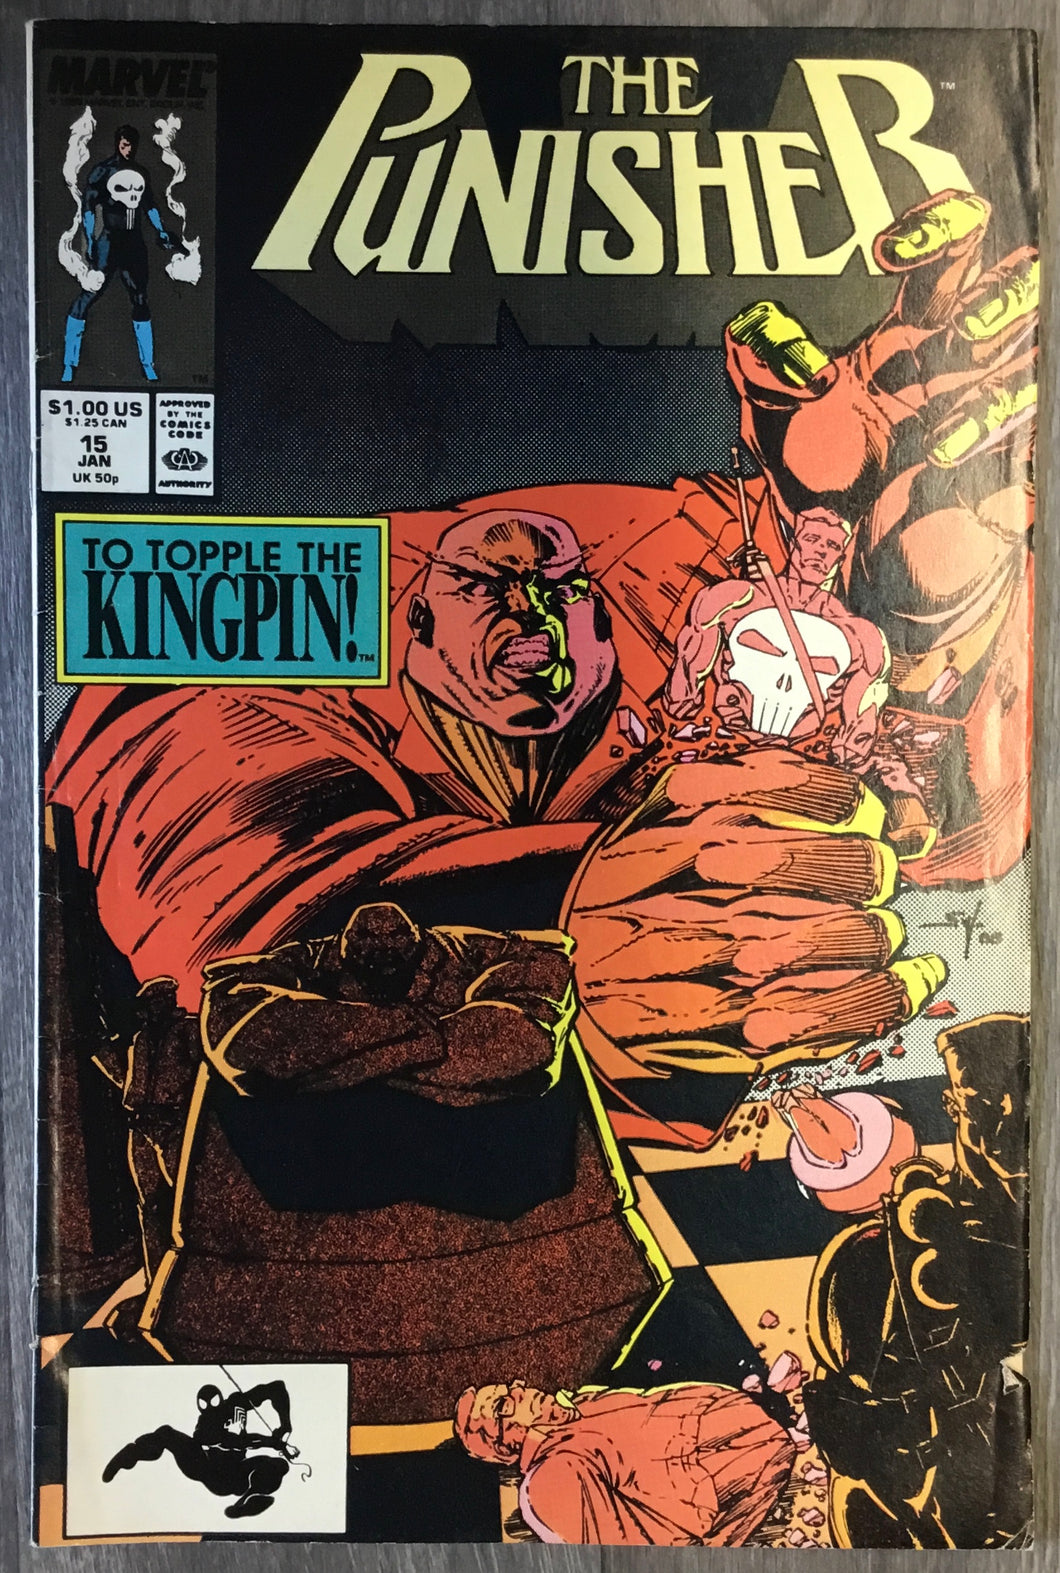 The Punisher No. #15 1989 Marvel Comics